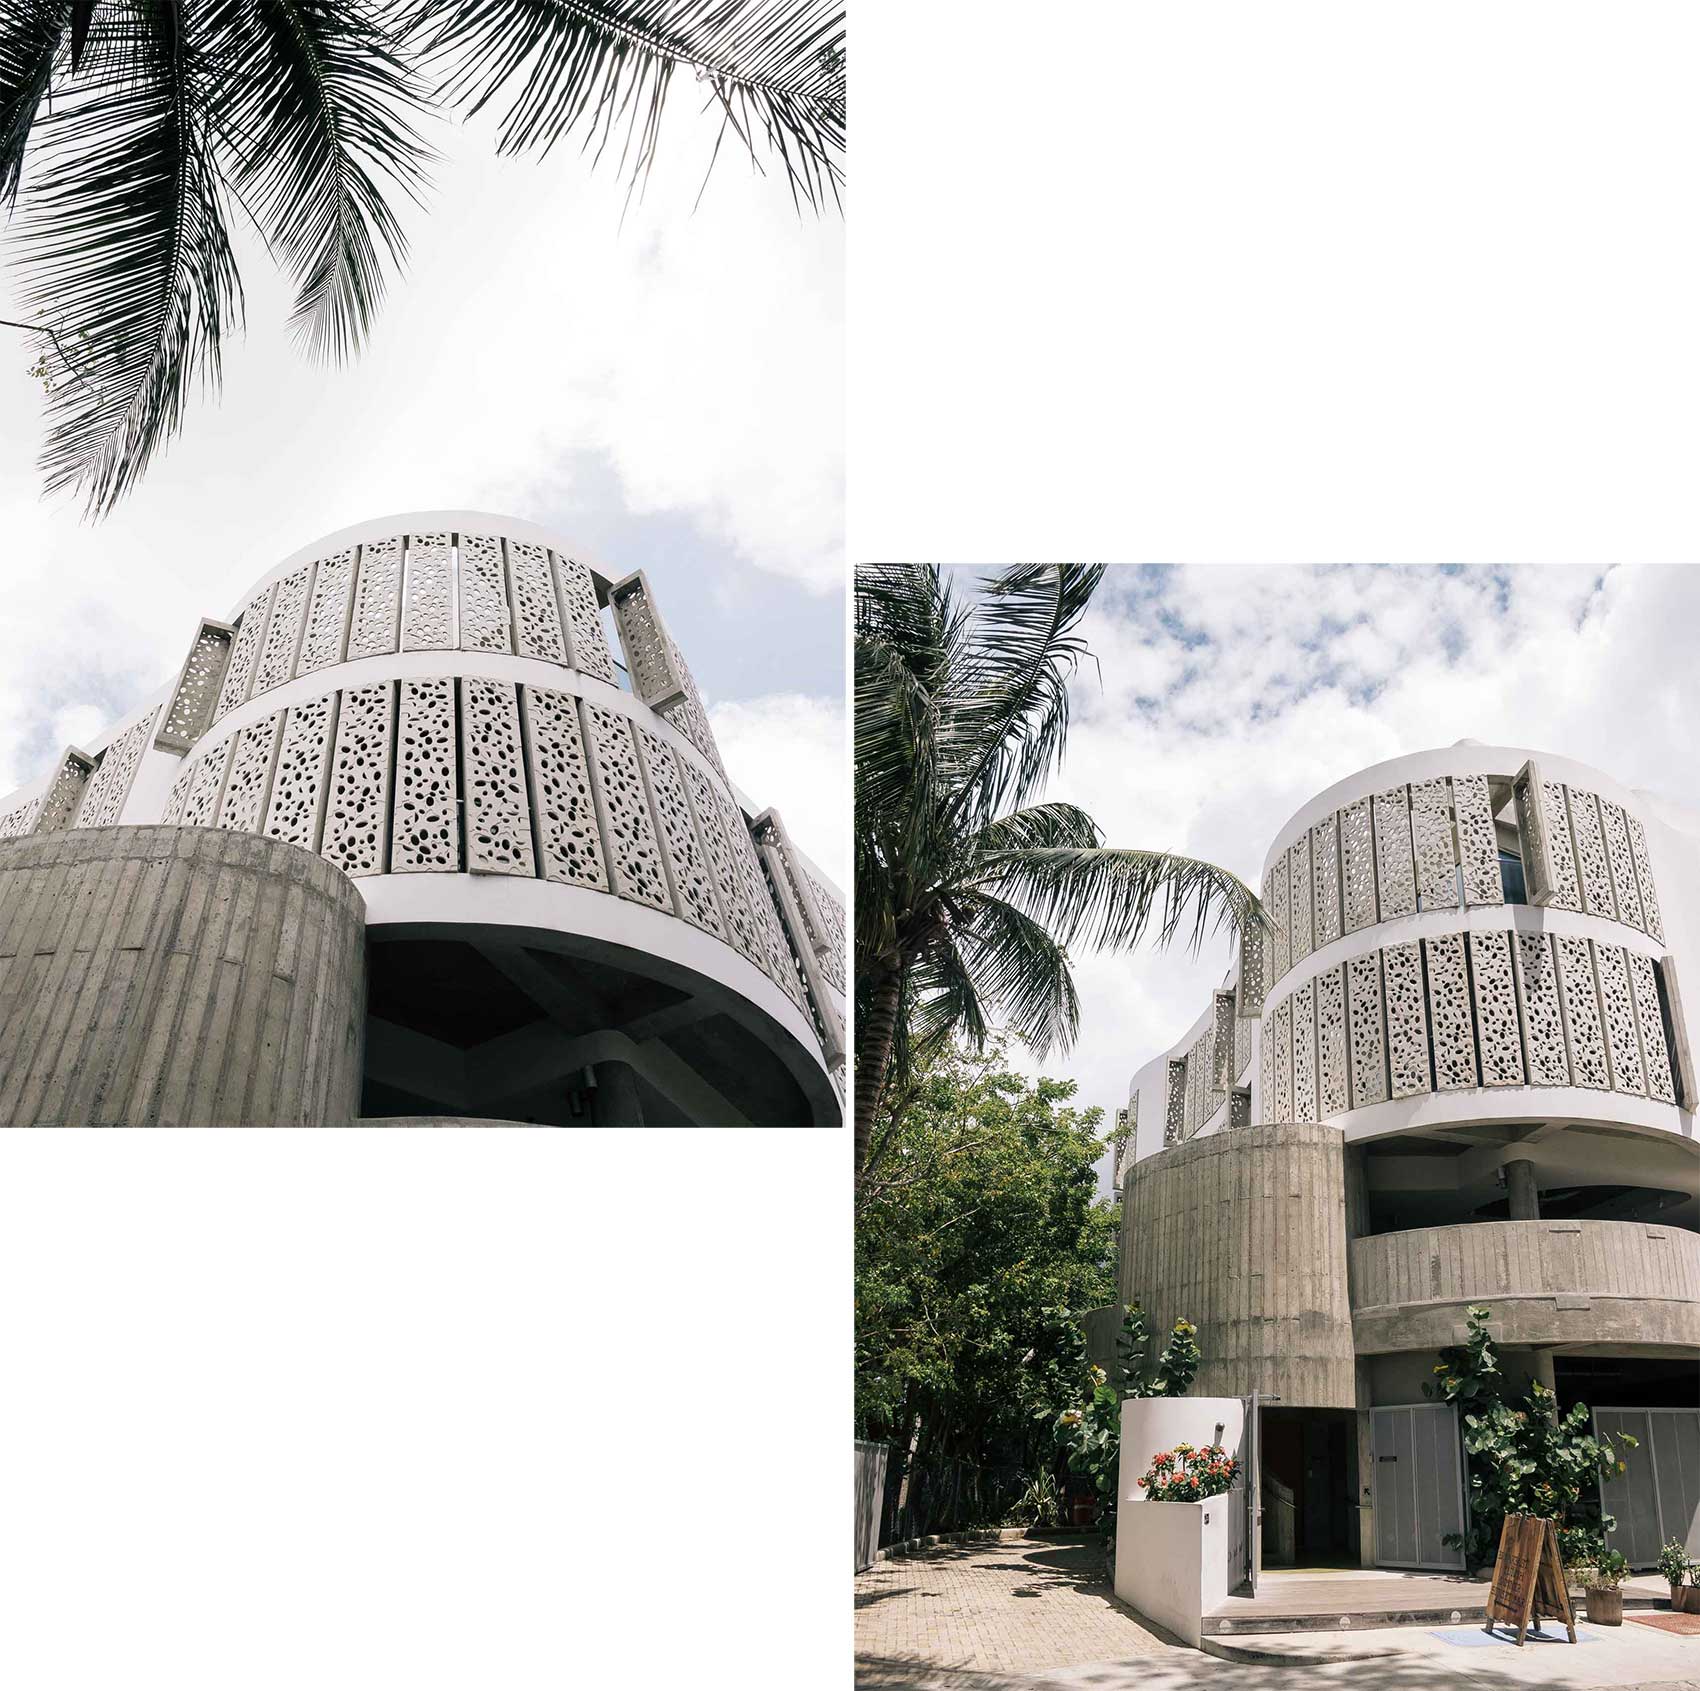 Design and architecture of El Blok hotel in Vieques Island, Puerto Rico